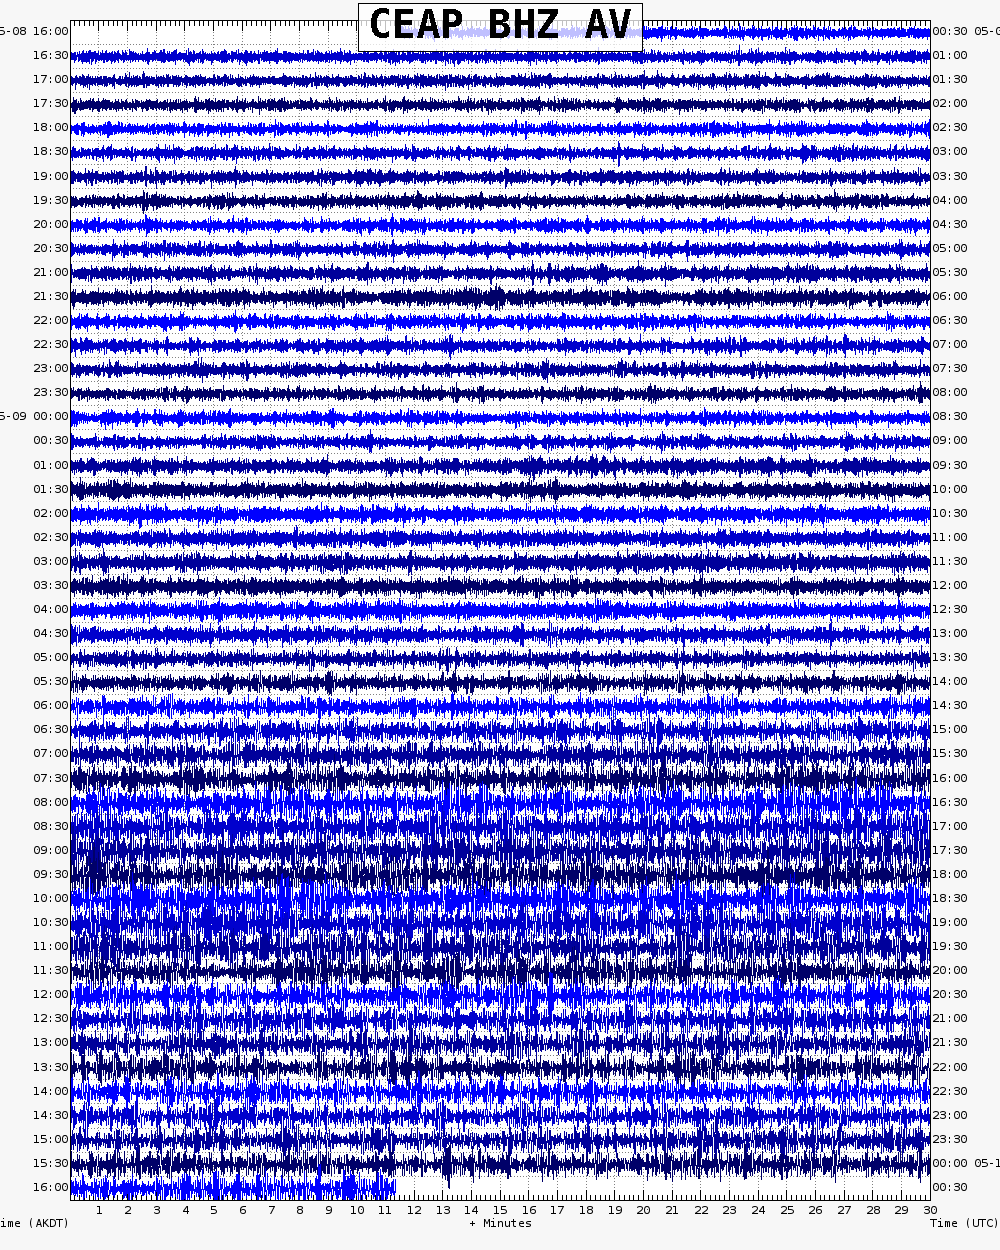 Semisopochnoi CEAP seismic station (AVO)